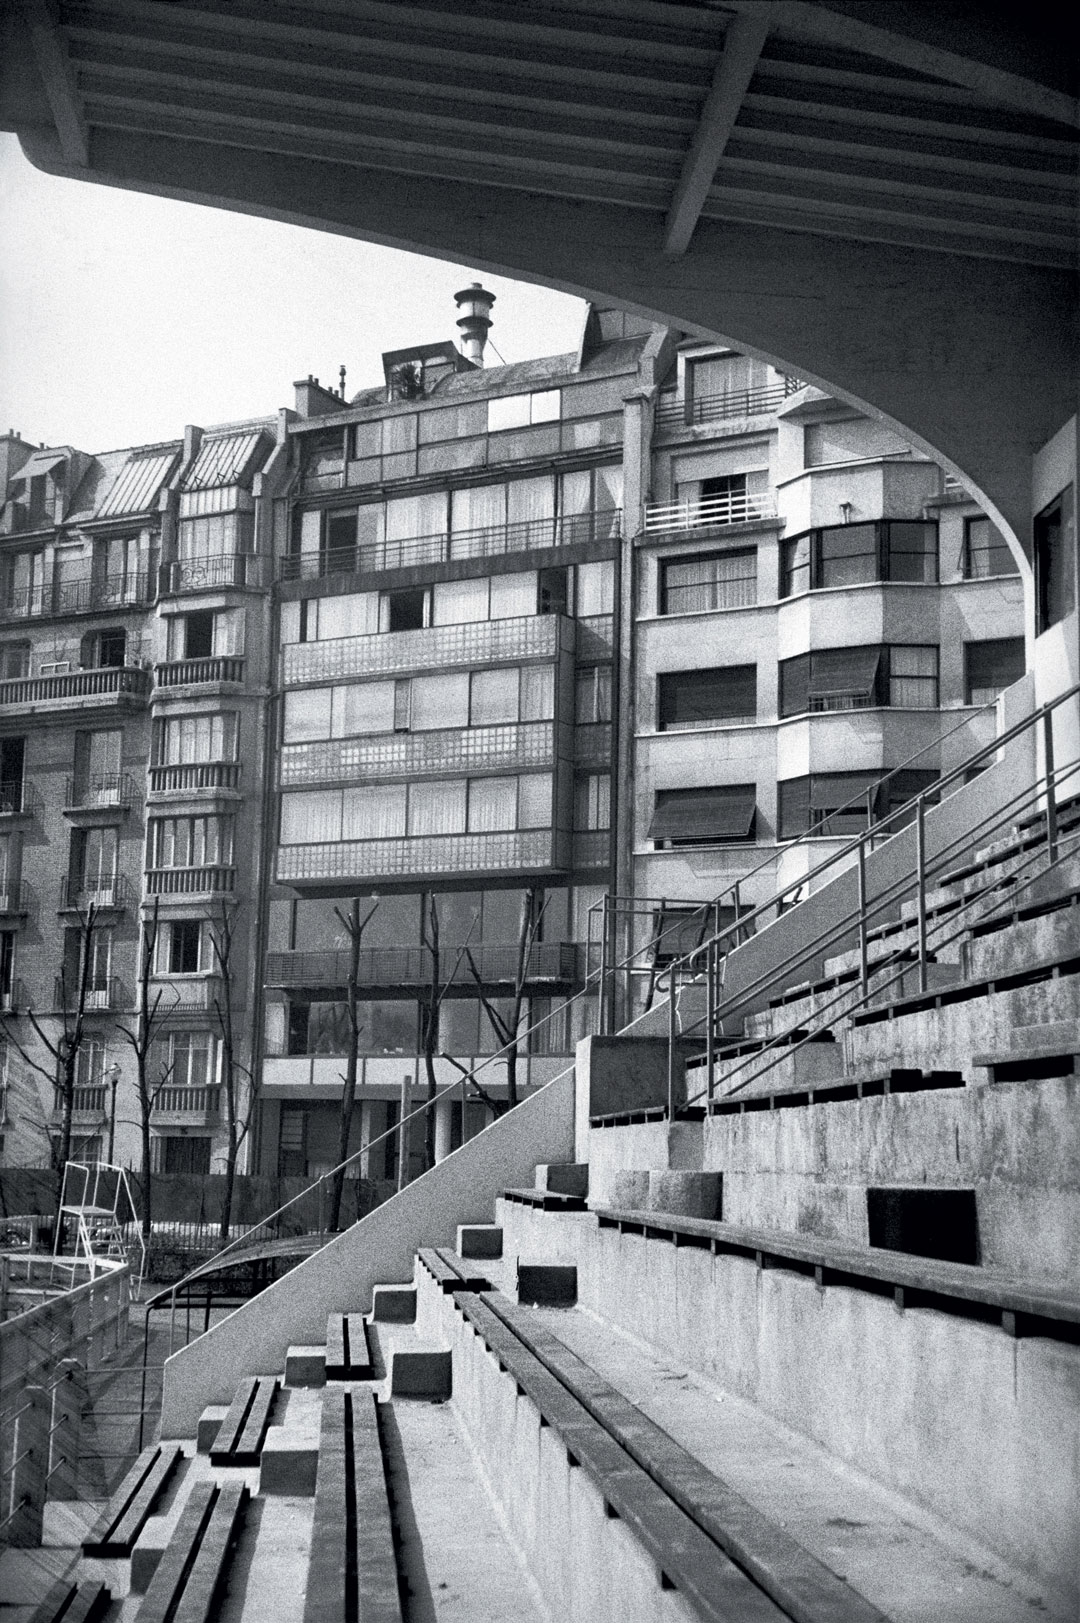 24 rue Nungesser-et-Coli, as reproduced in Le Corbusier Le Grand